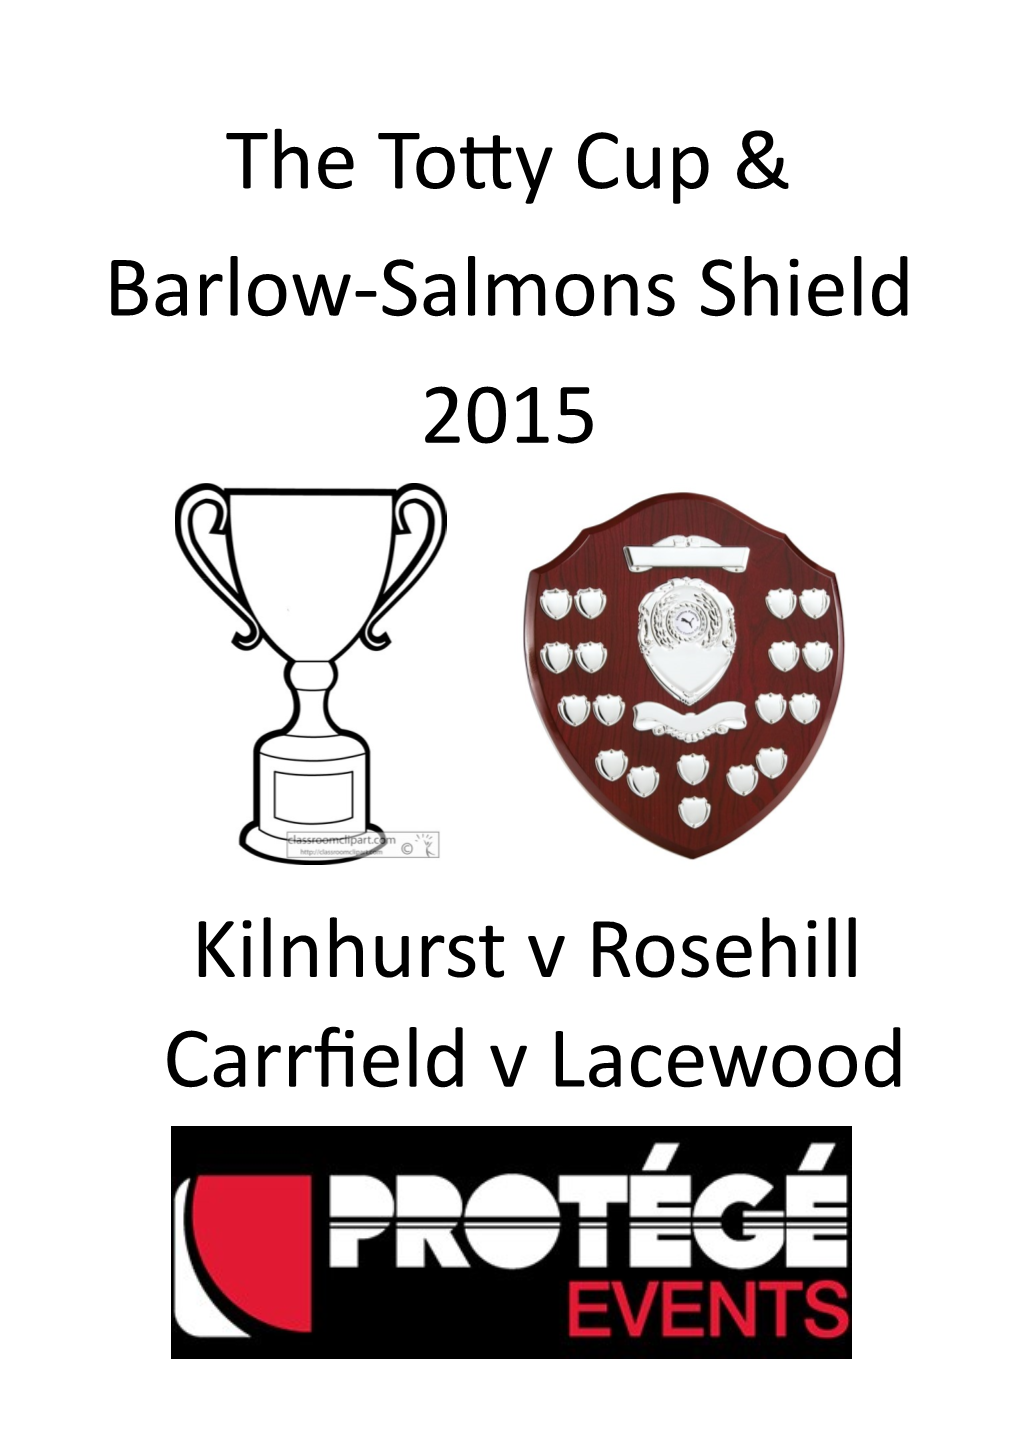 The Totty Cup & Barlow-Salmons Shield 2015 Kilnhurst V Rosehill